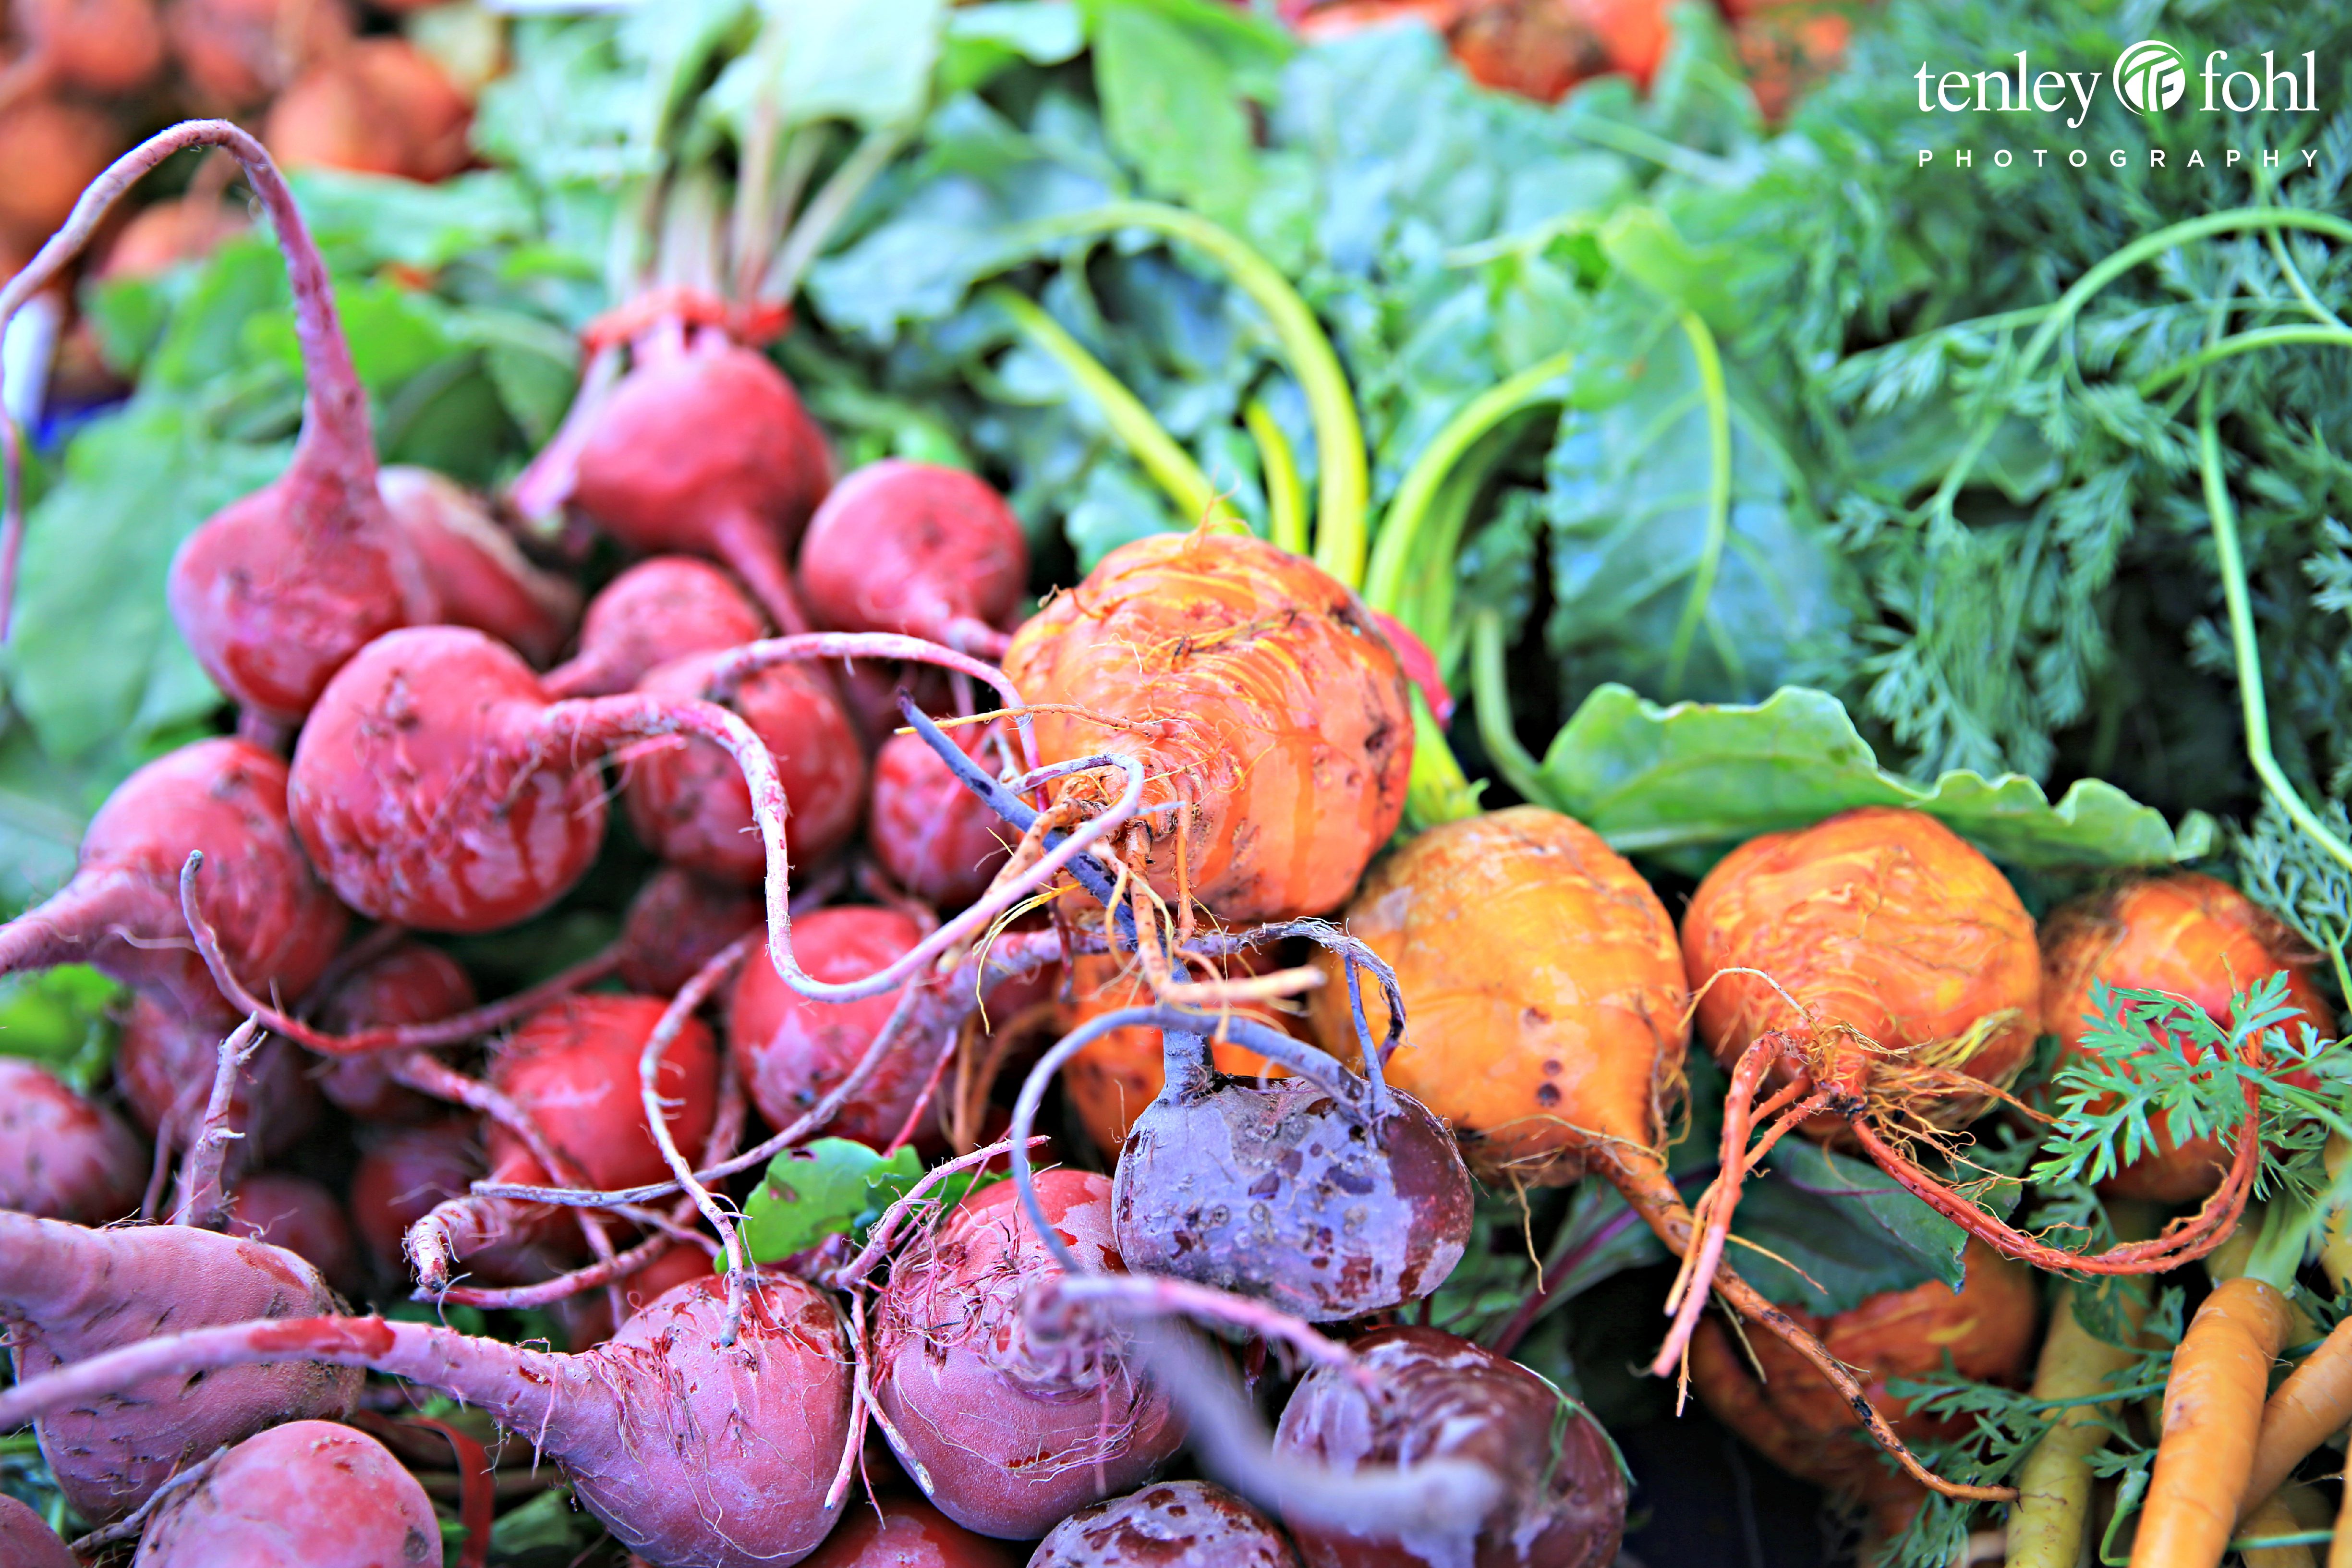 Farmers markets provide fresh produce year-round